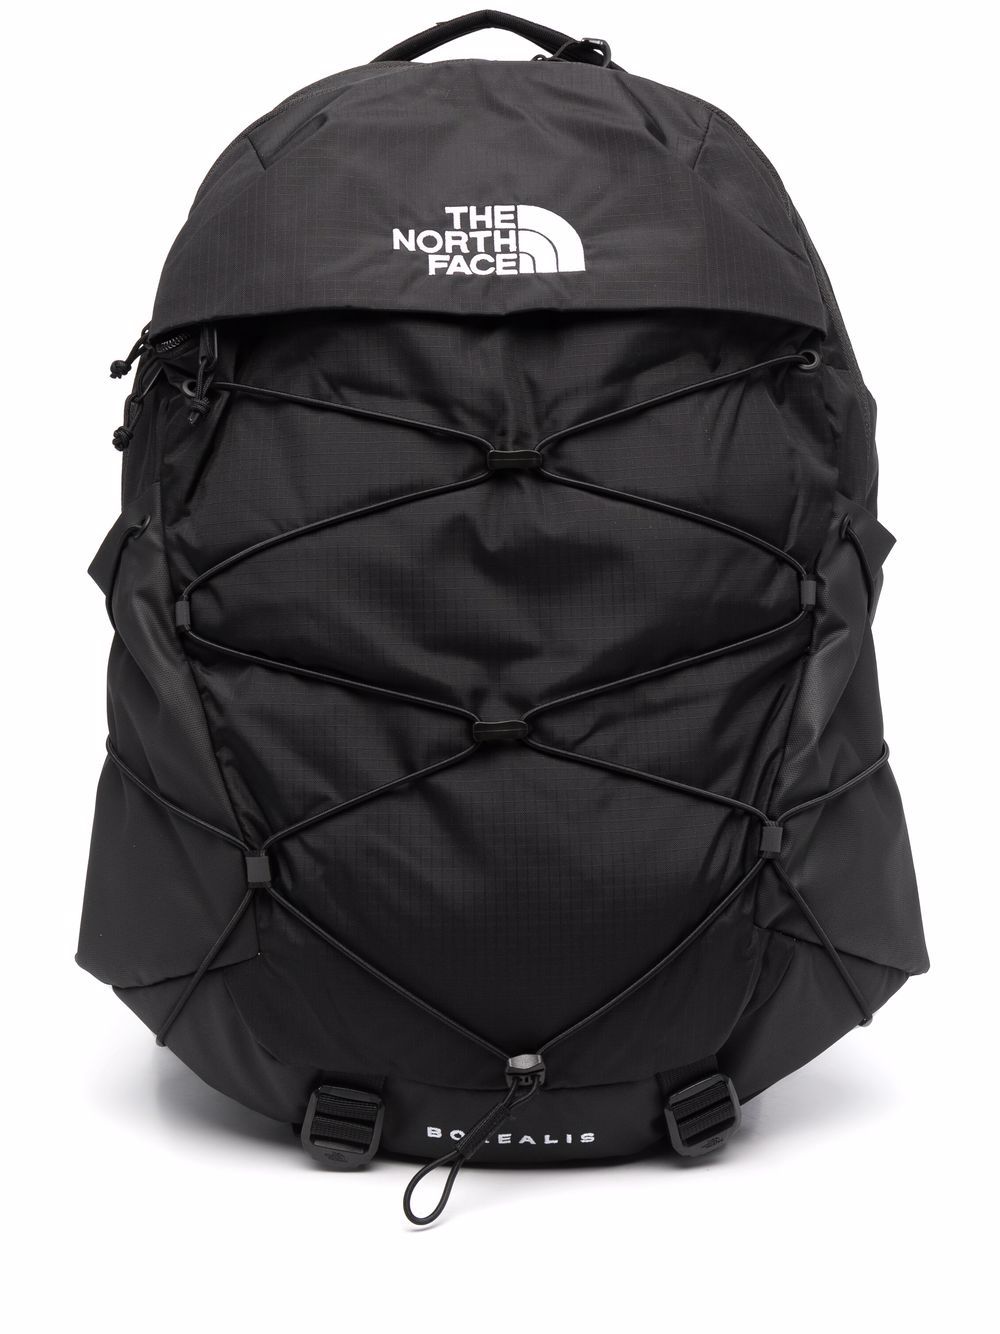 The North Face Borealis rugzak met geborduurd logo - Zwart